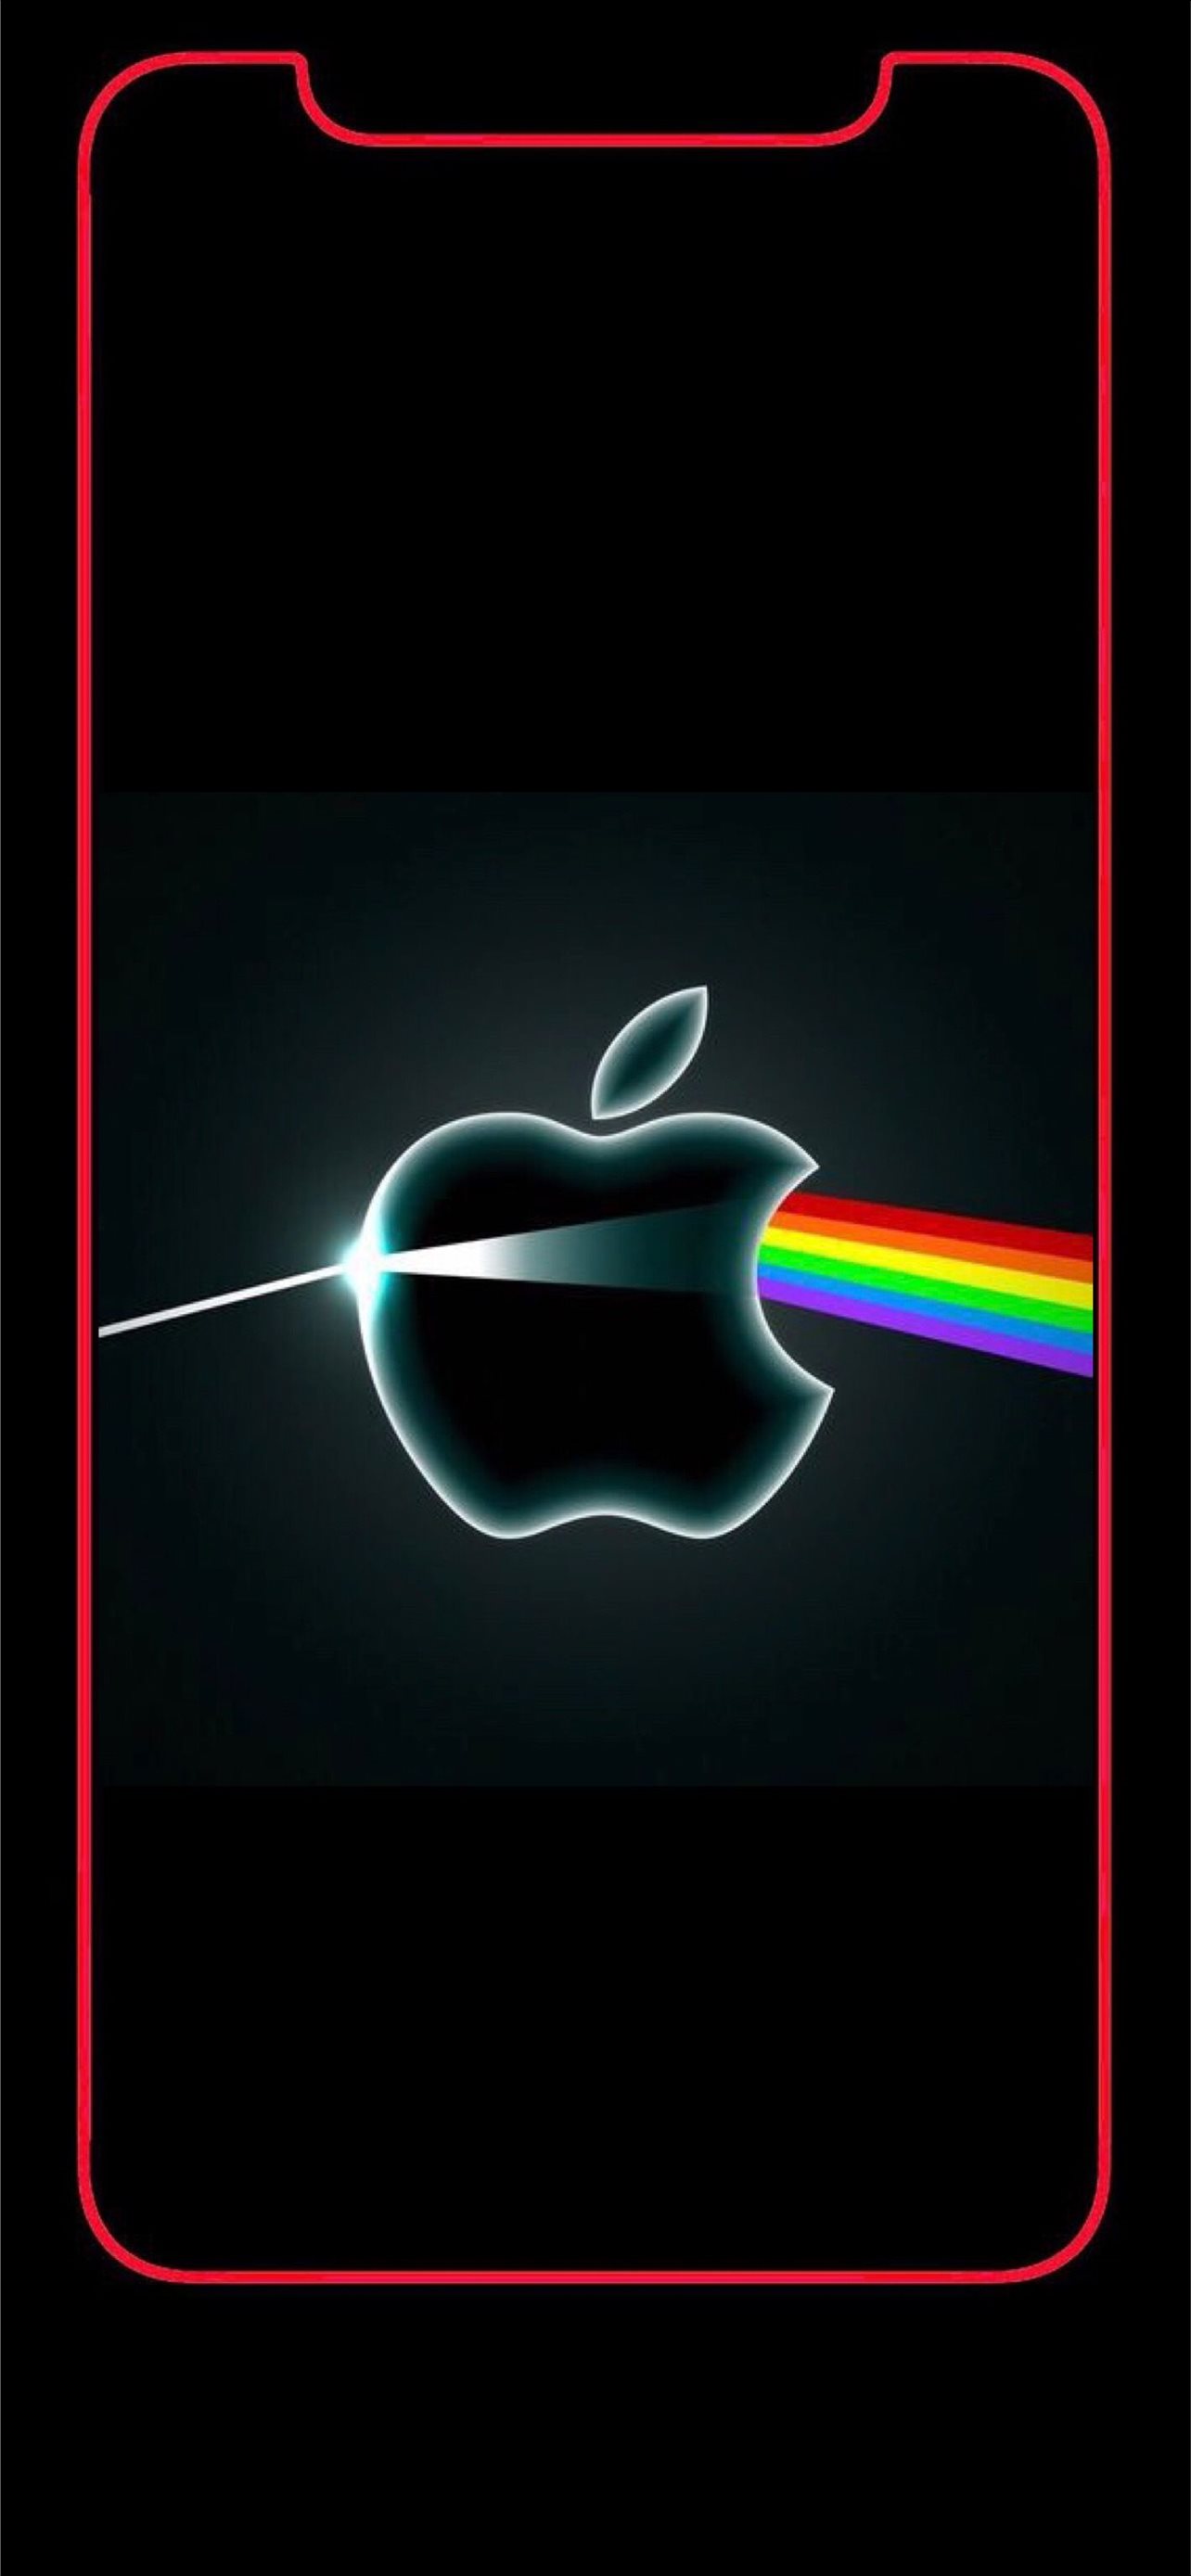 Apple logo rainbow 3 iPhone Wallpaper Free Download